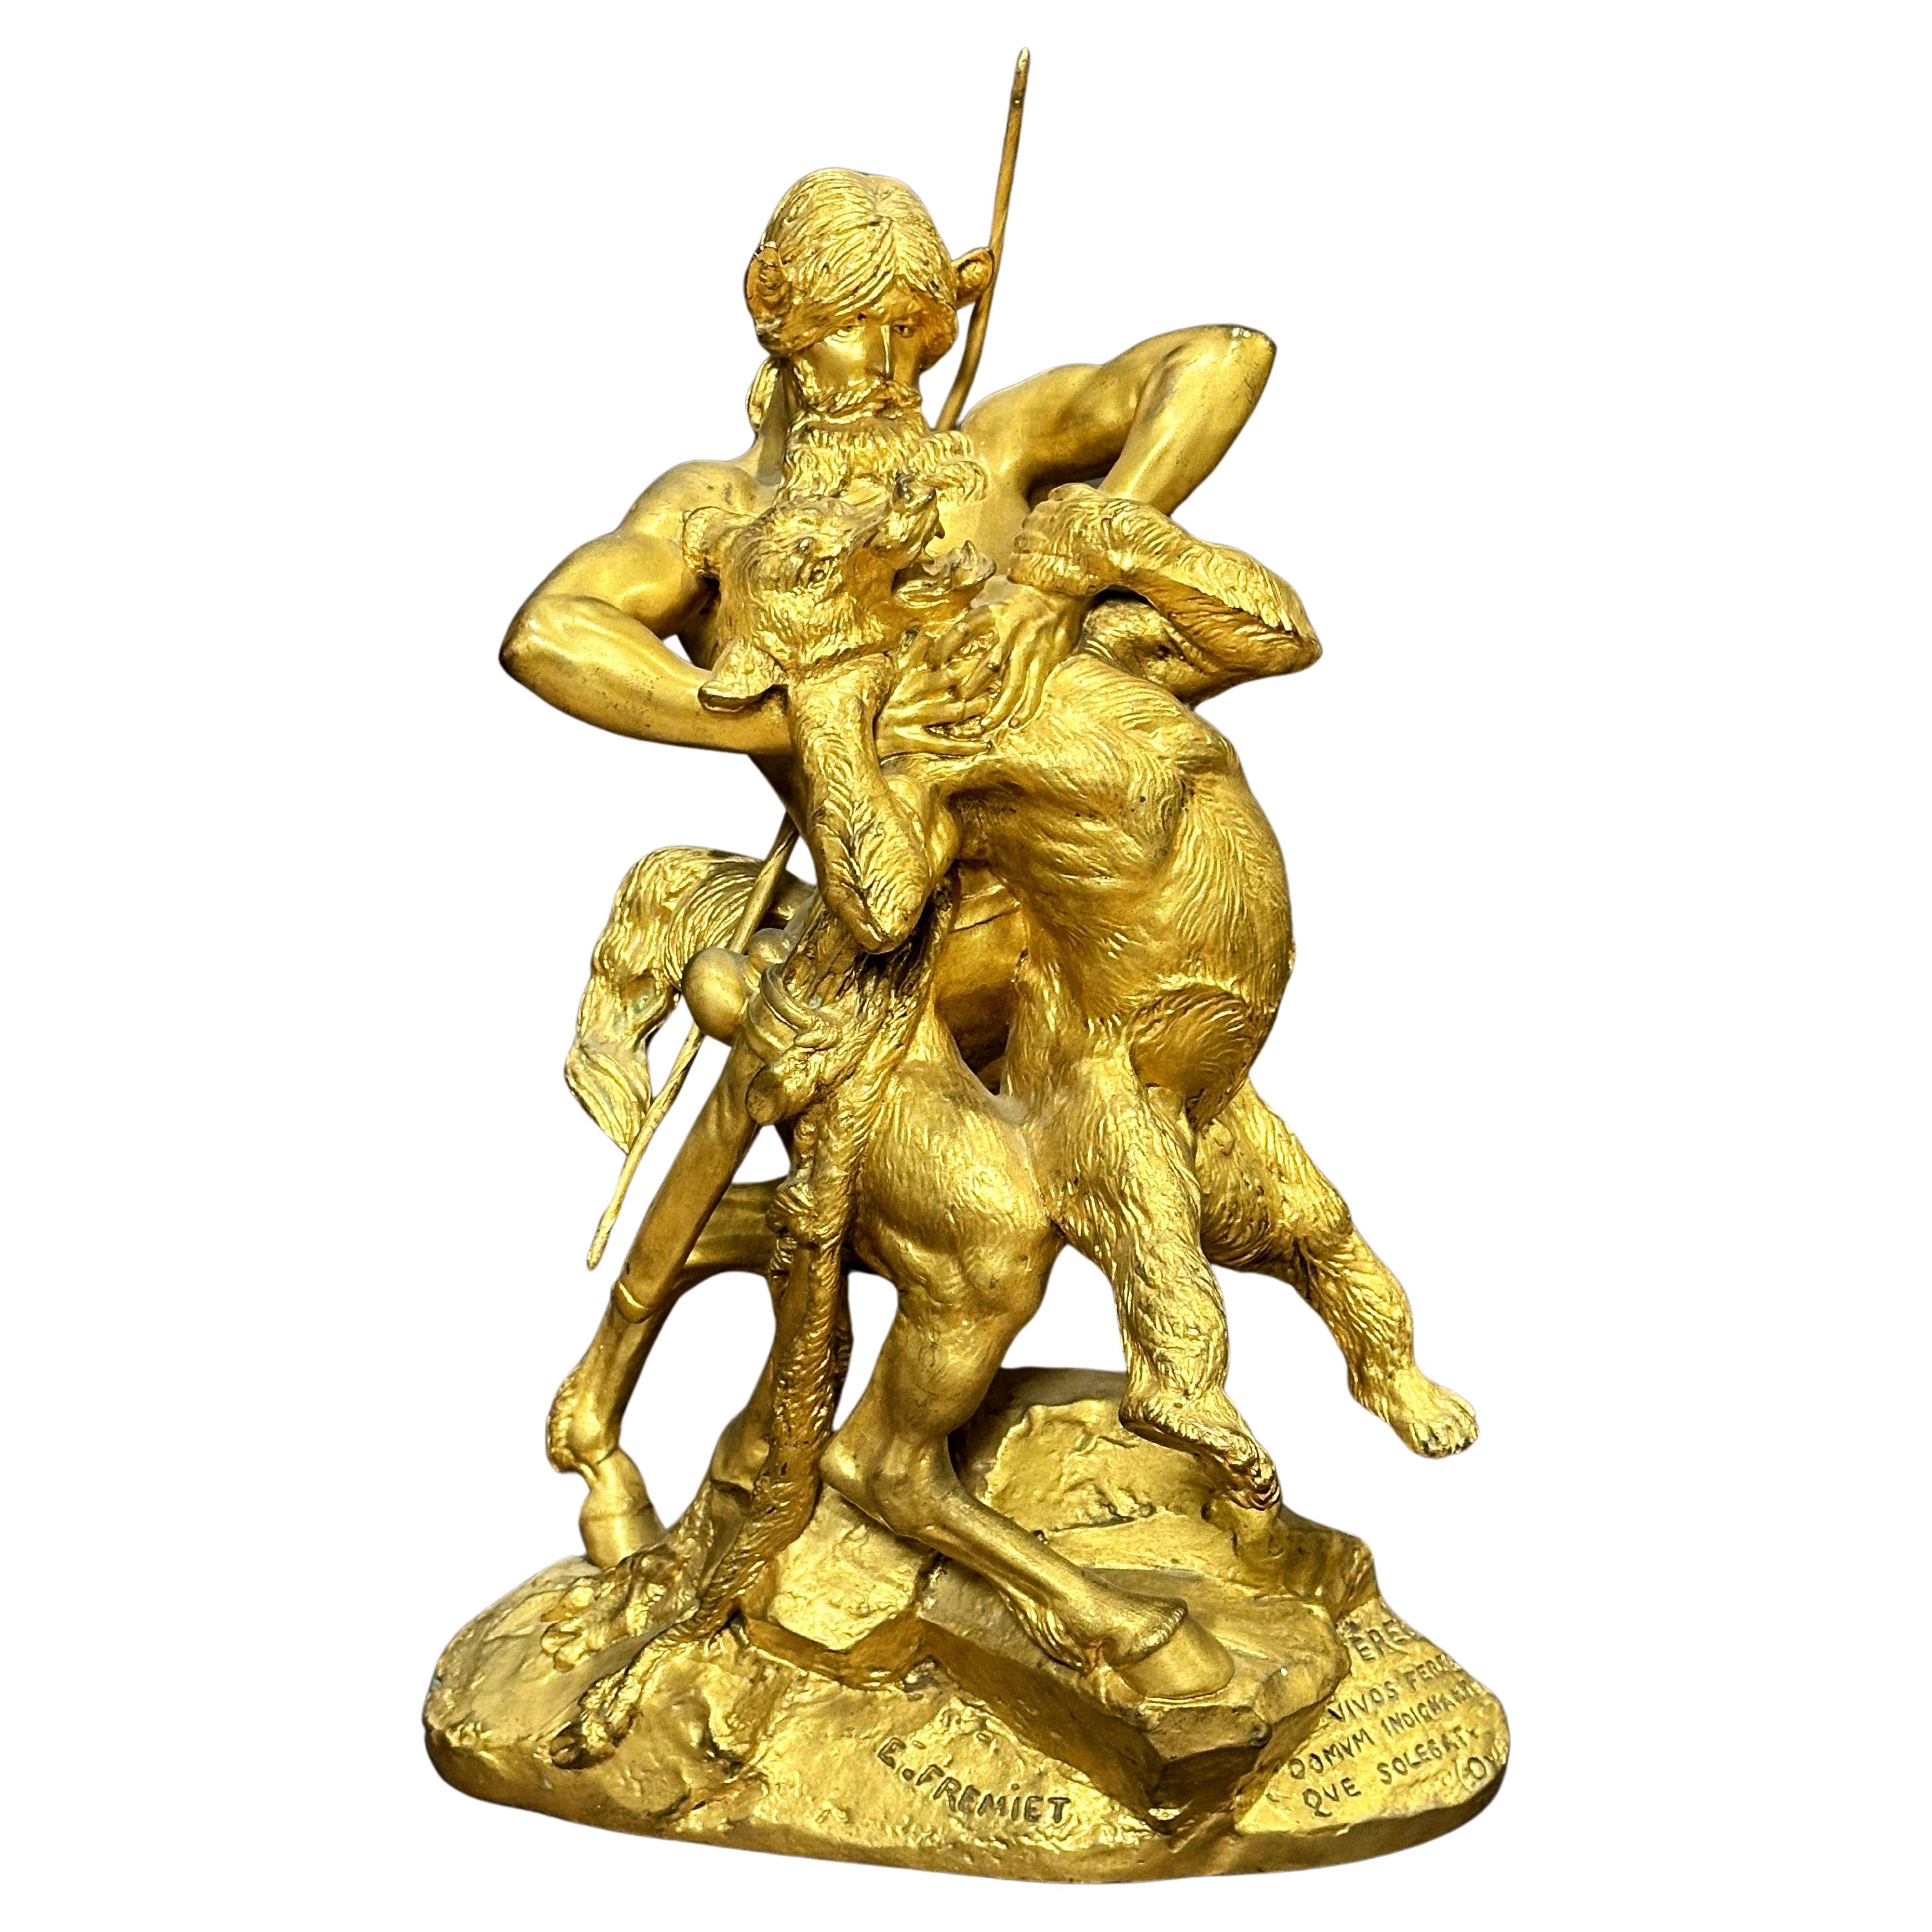 Rare Gilt Bronze Sculptural Group By Emmanuel Fremiet (1824 - 1910) For Sale